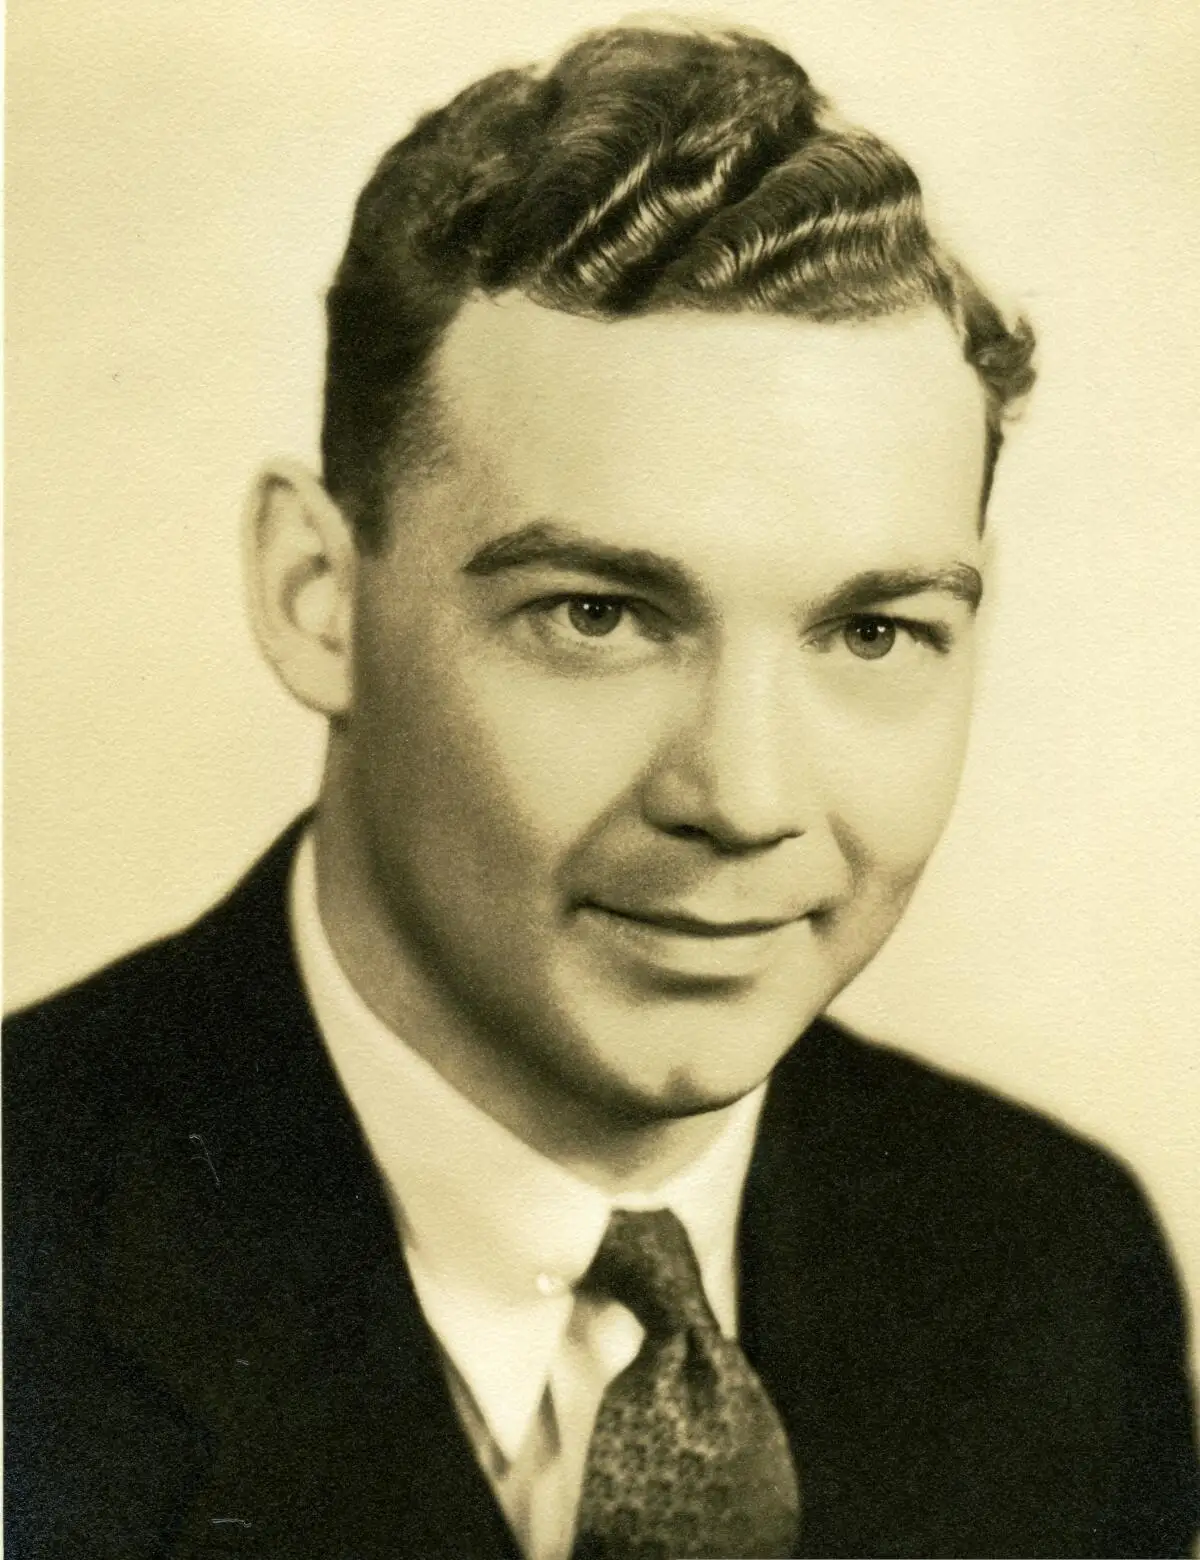 A photo of U.S. Army psychiatrist Douglas M. Kelley, who passed away in 1958.